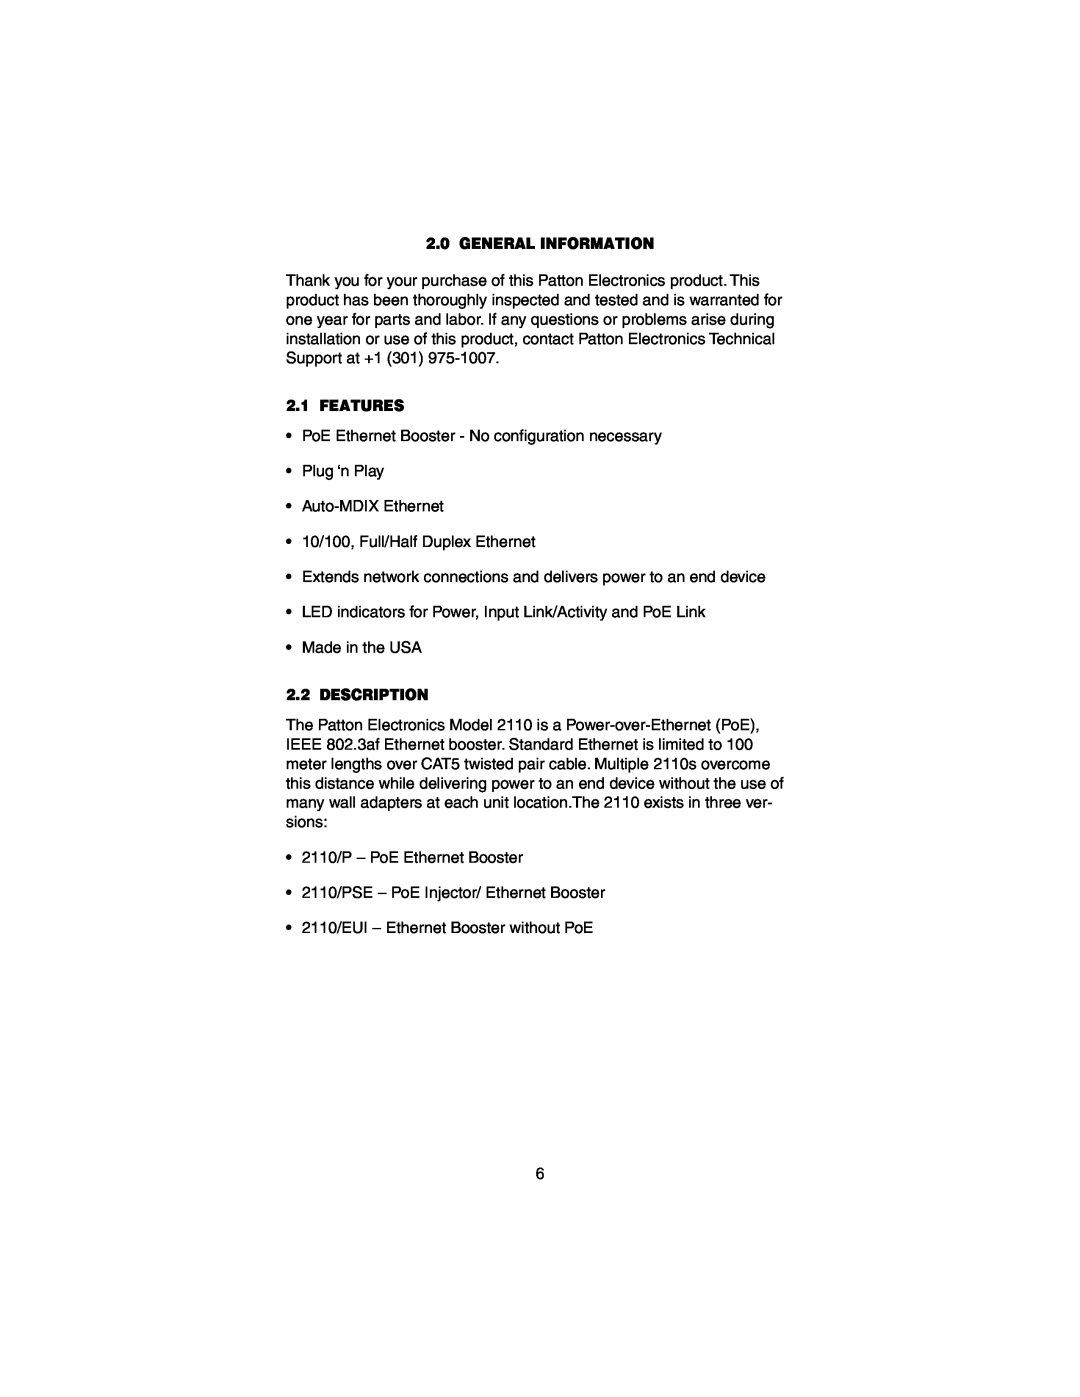 Patton electronic 2110 user manual General Information, Features, Description 